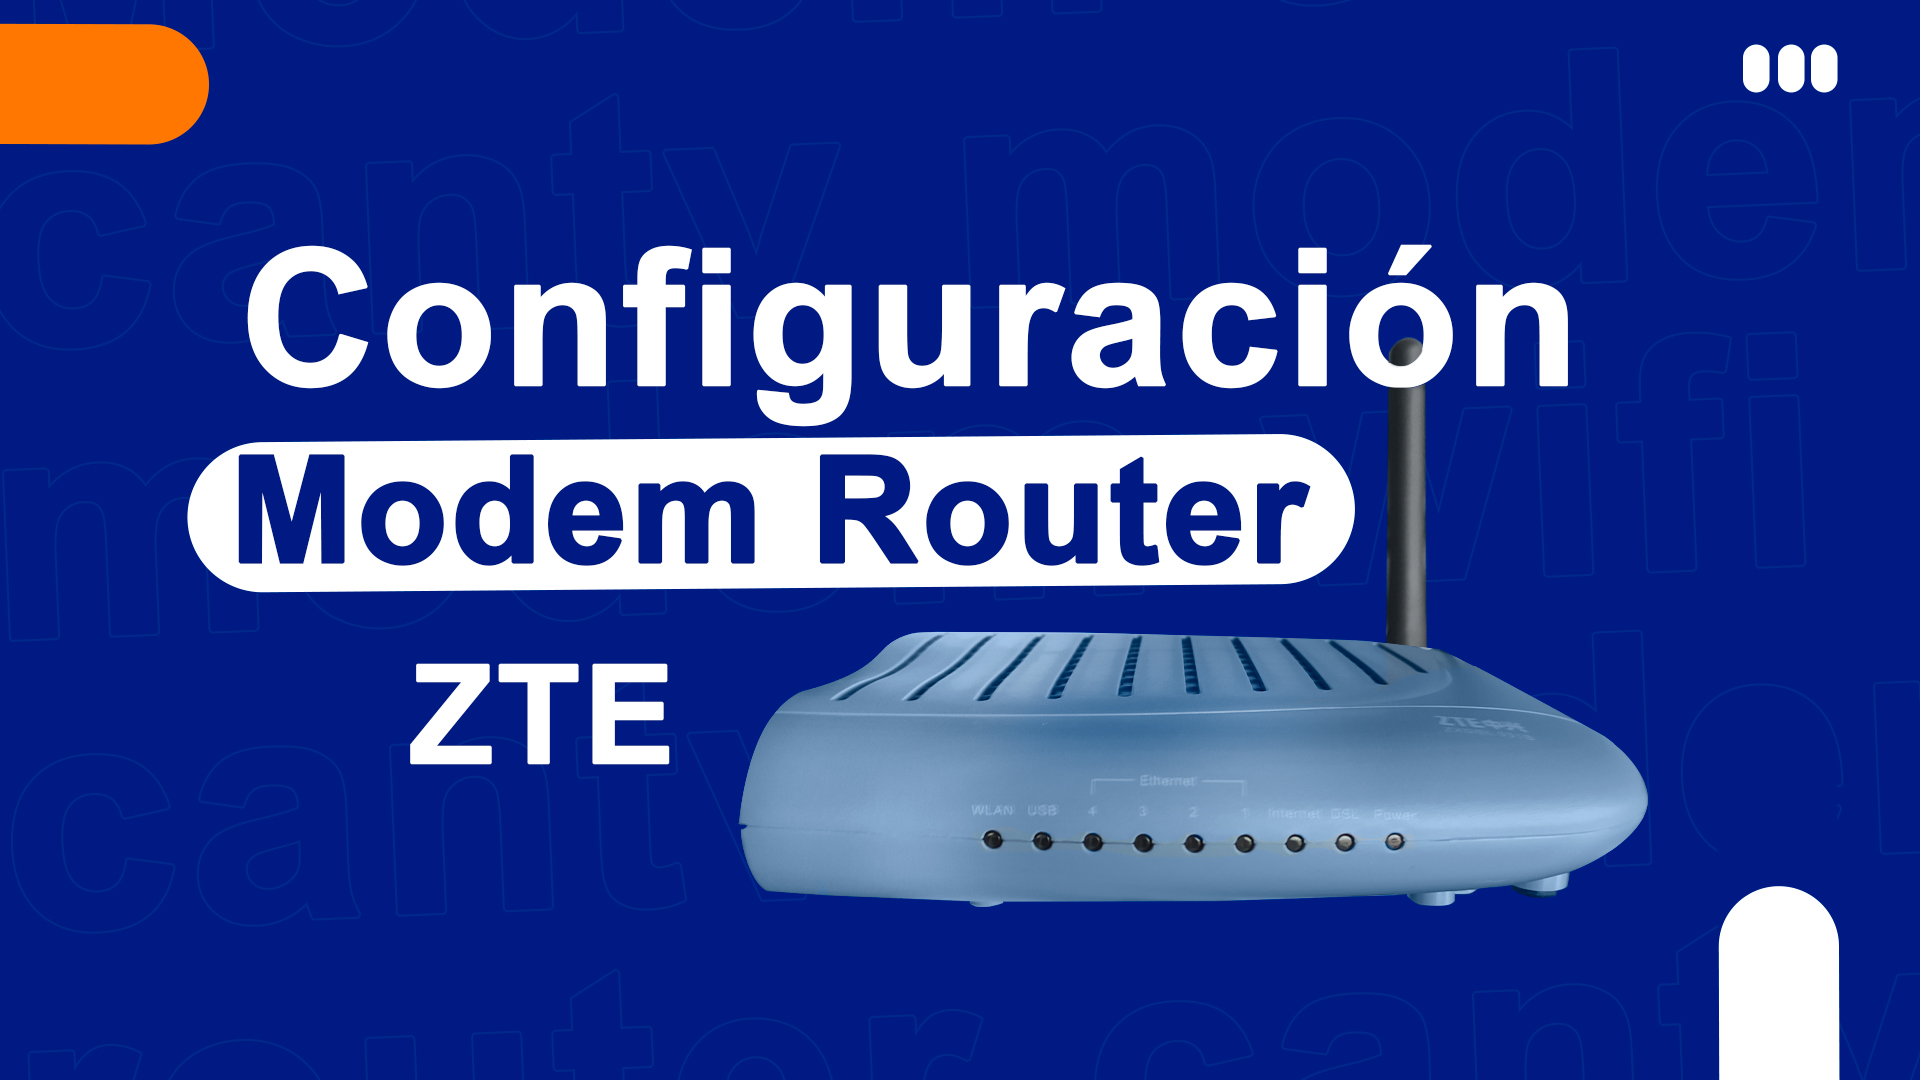 ⚙️Configuracion de modem router #ZTE modelo 531B – Idioma ingles